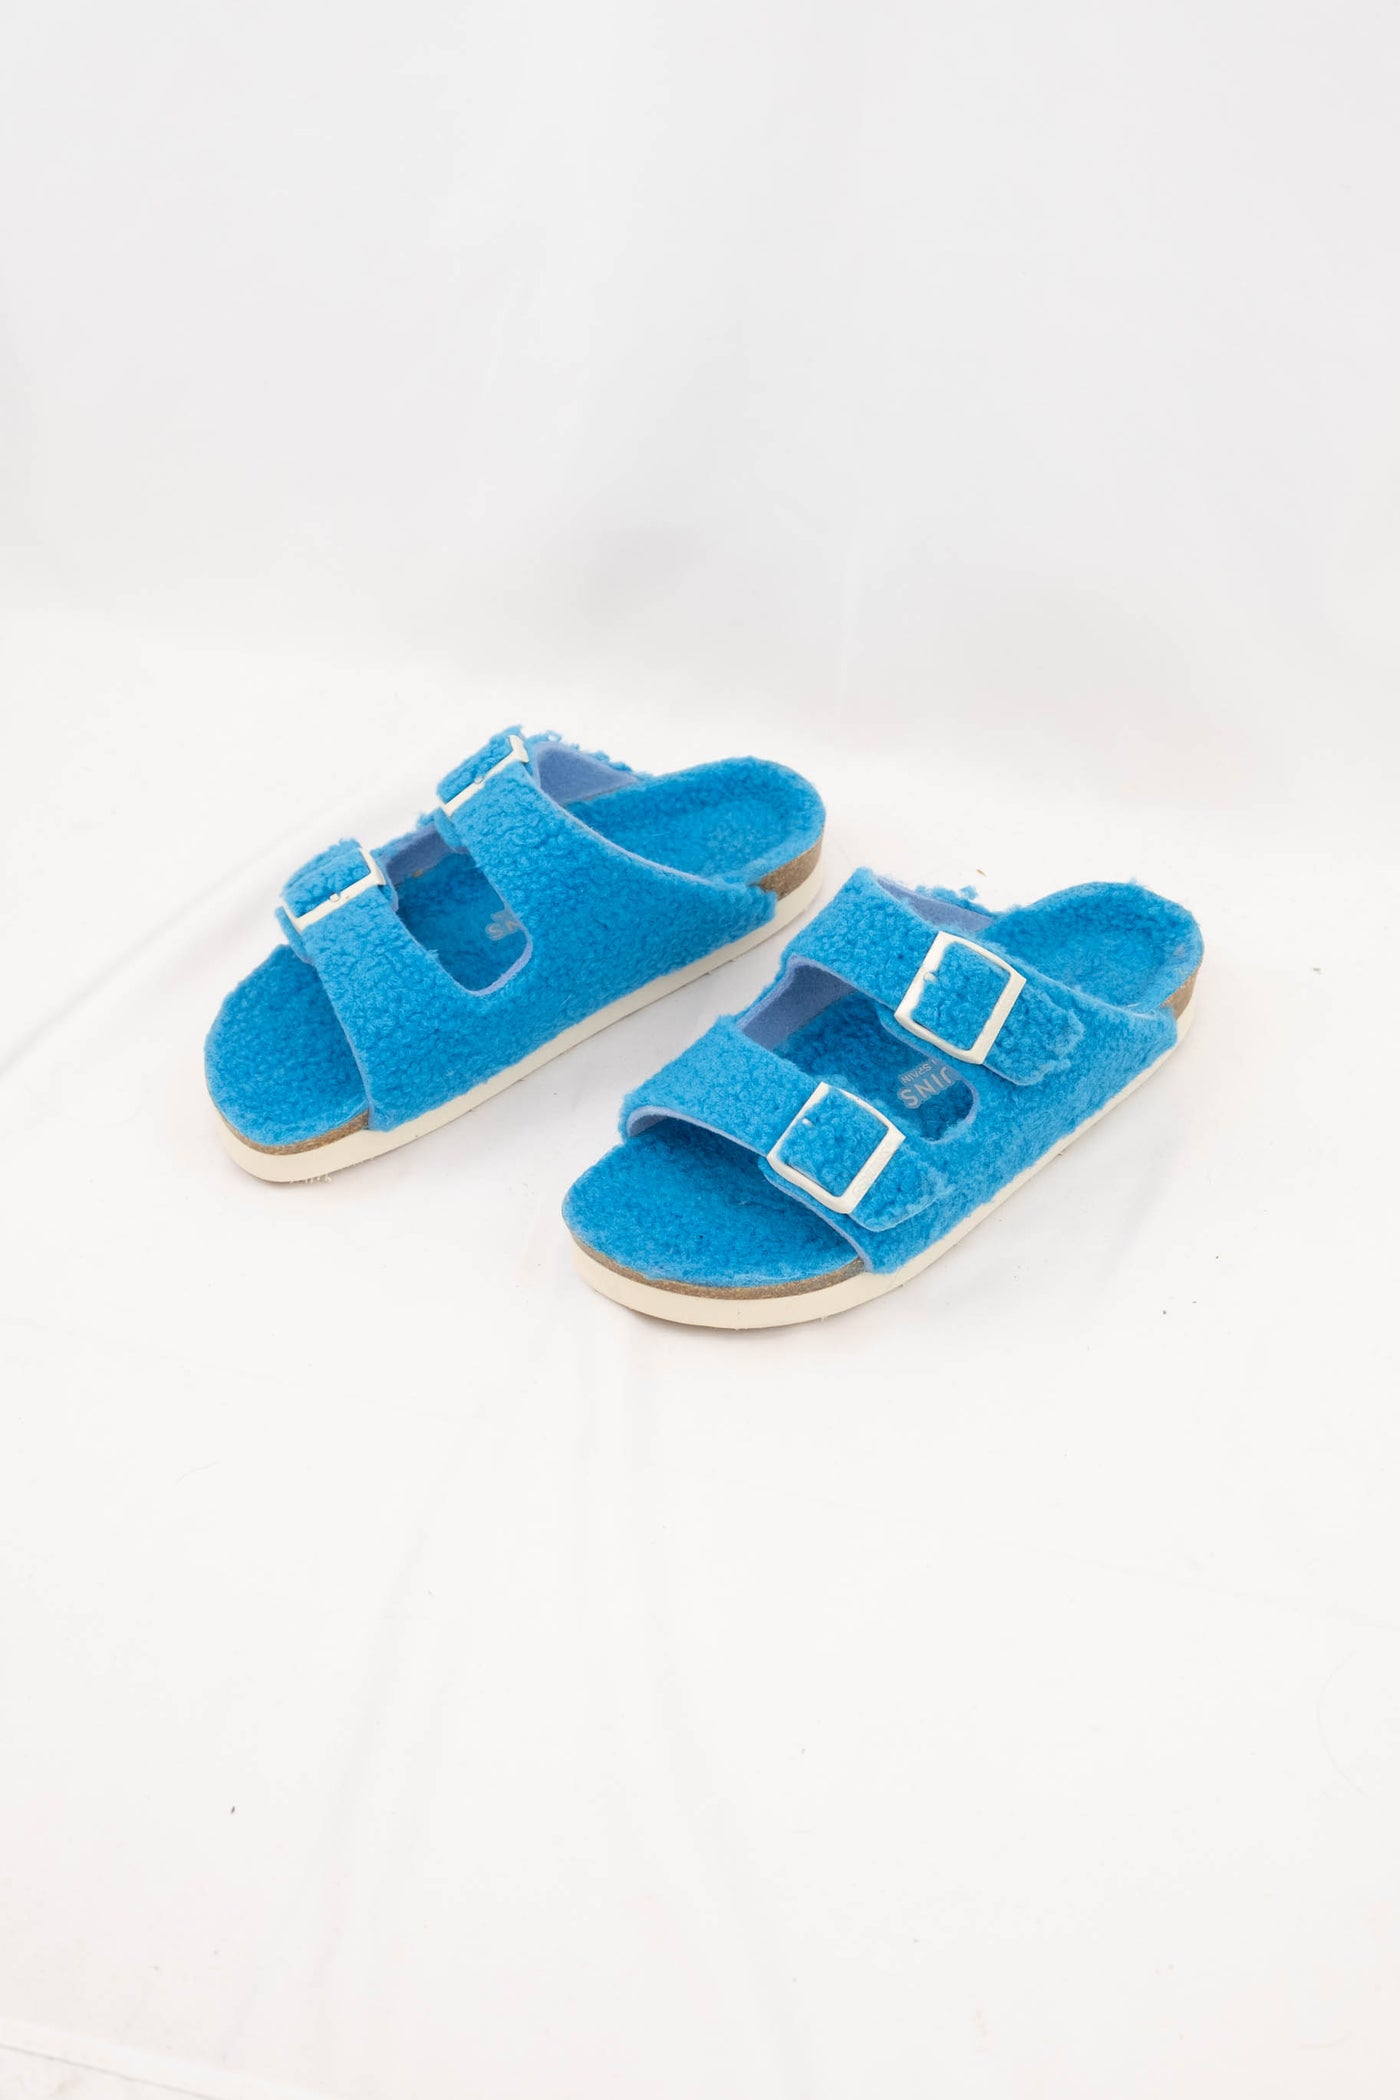 Sandalias azules